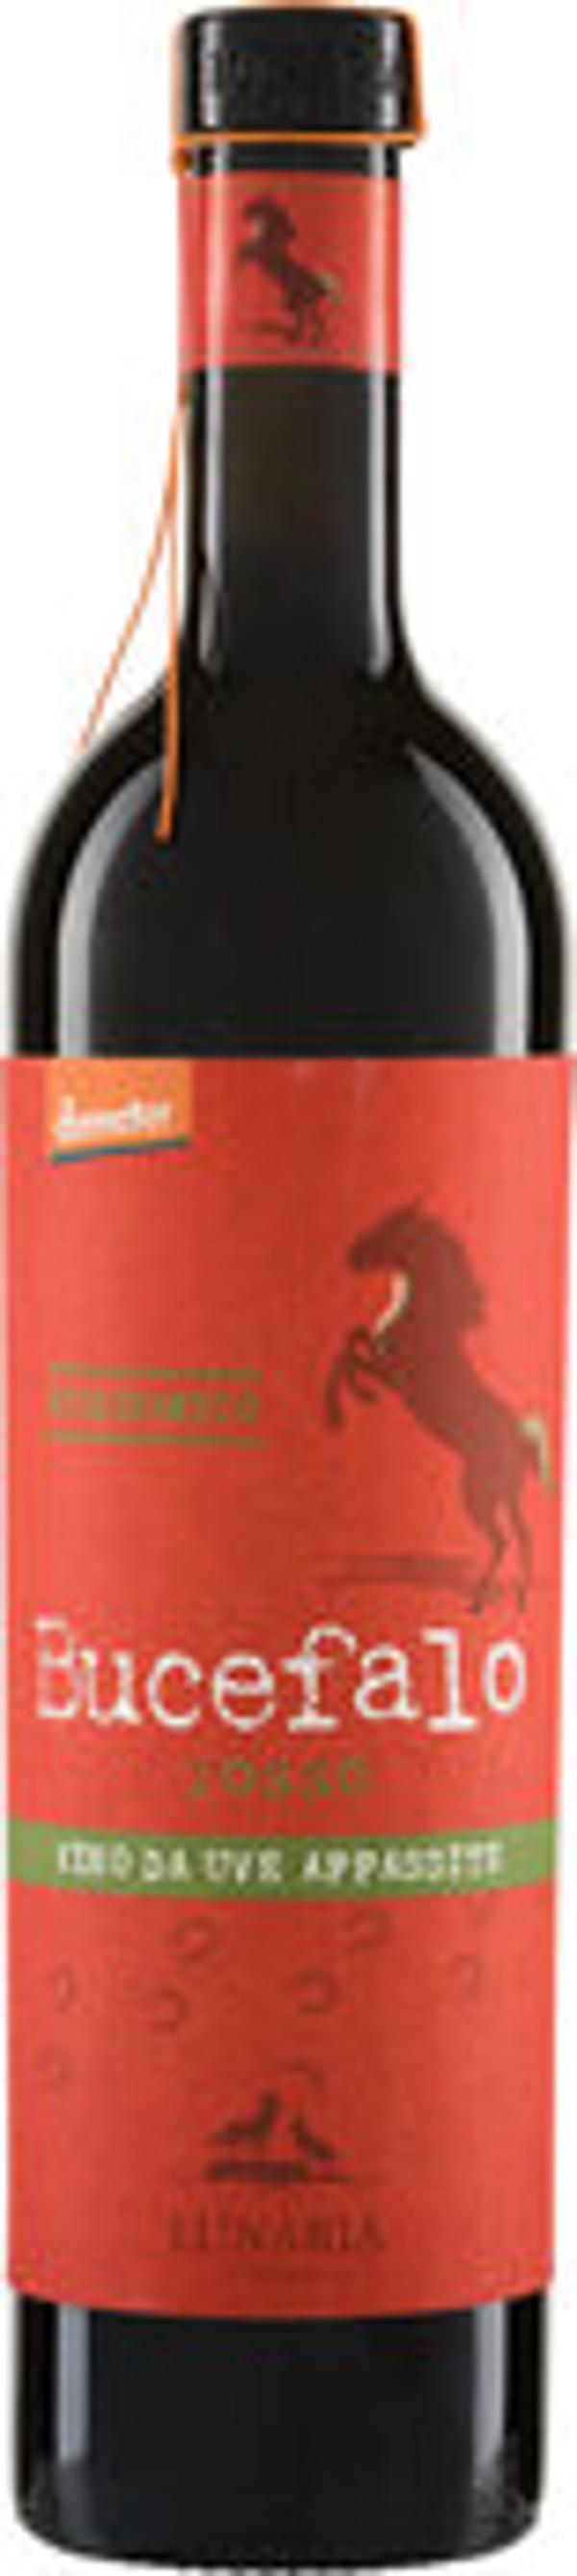 Produktfoto zu Rotwein Bucefalo da Uve Appassite 0,75l